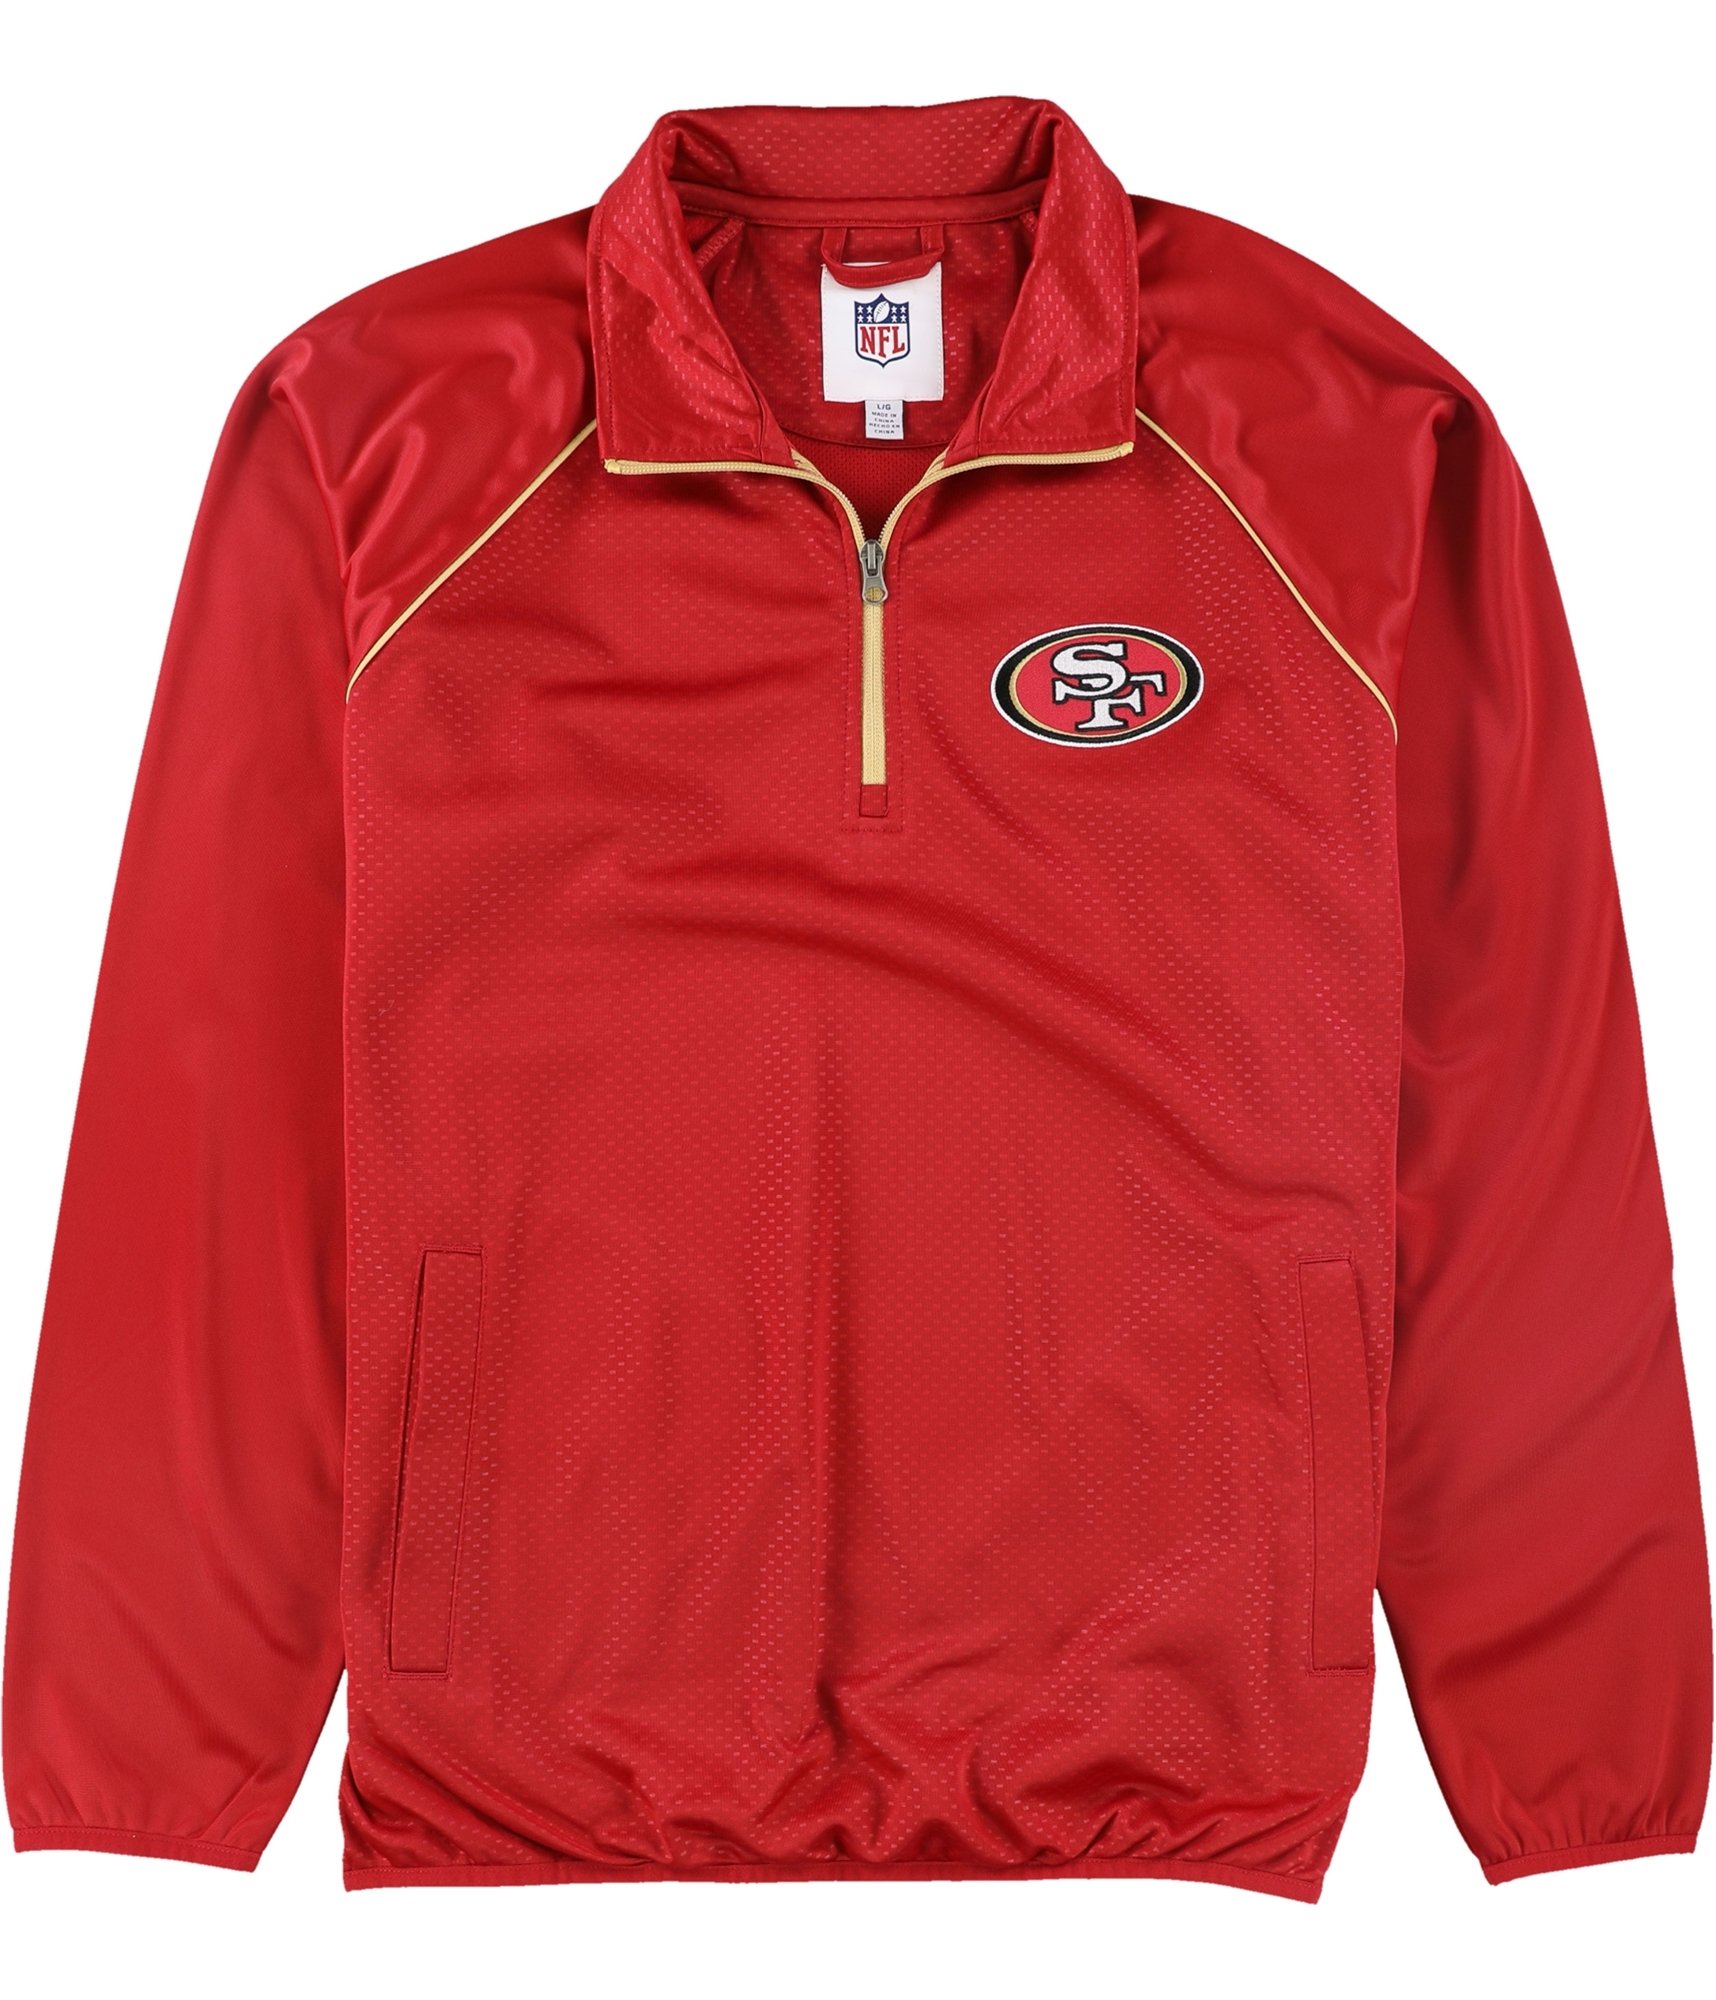 NFL Mens San Francisco 49ers Sweatshirt, Red, Small